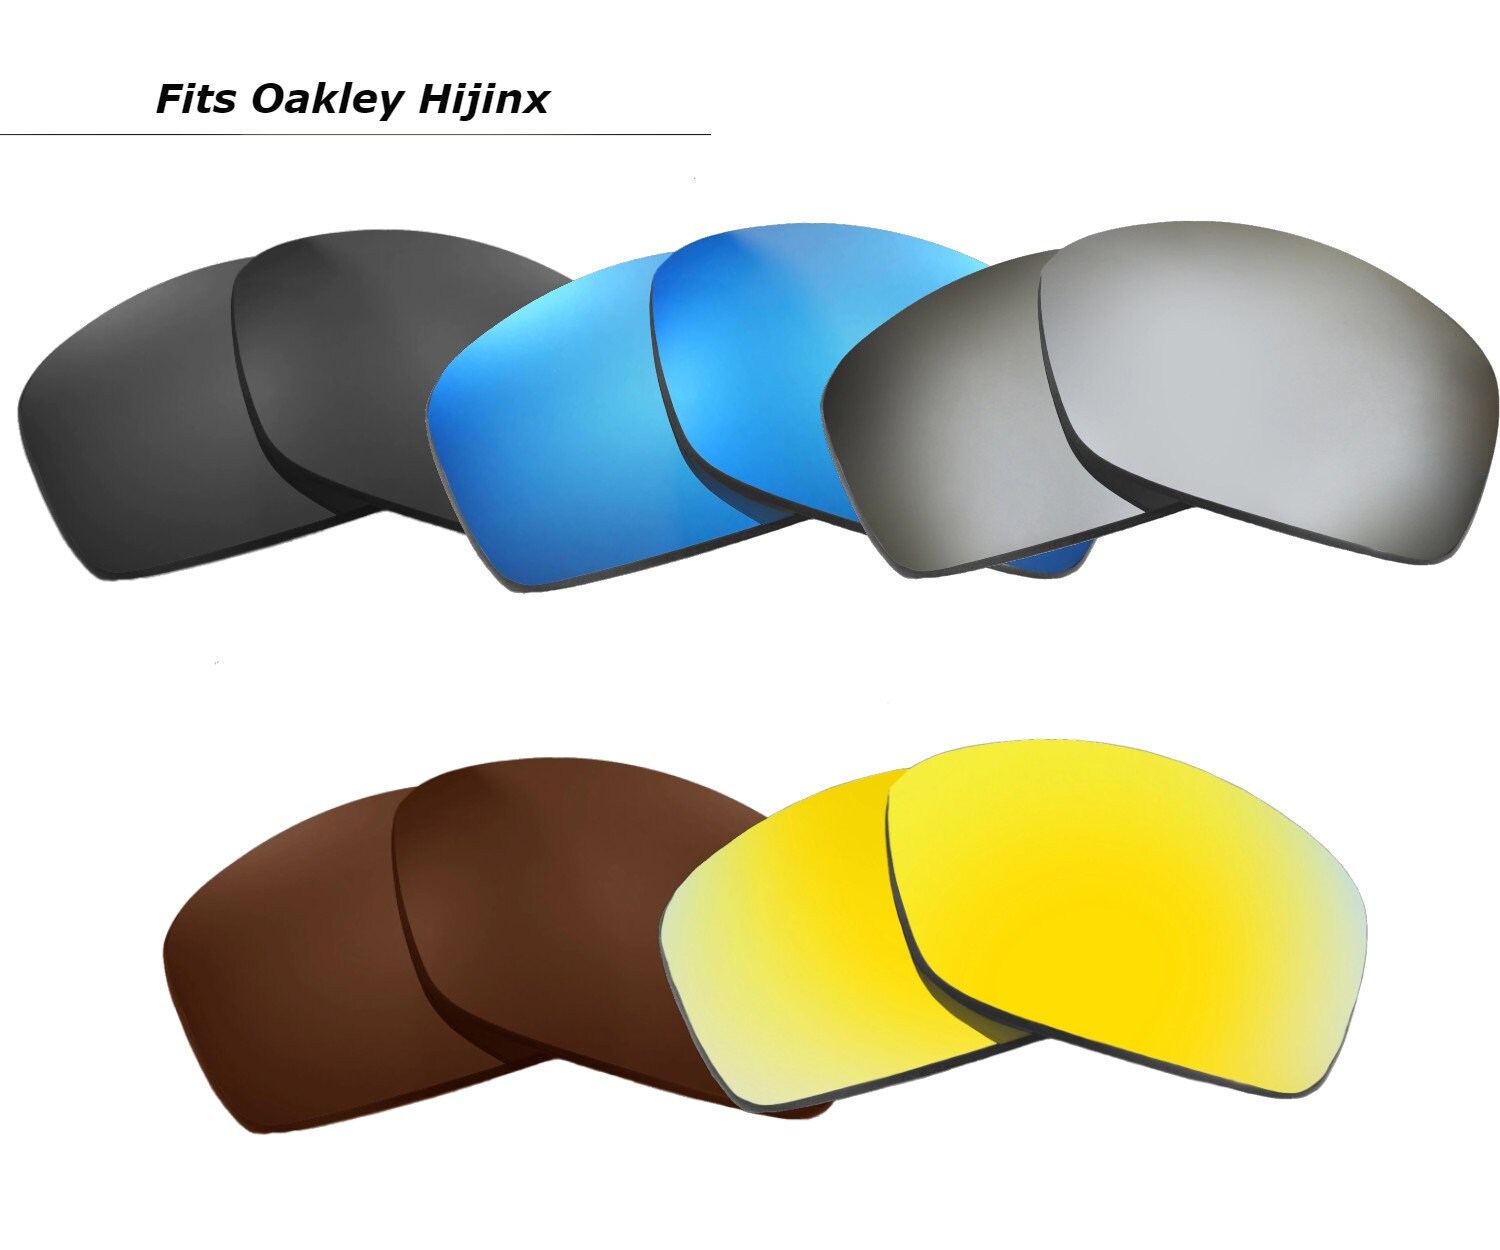 Fits Oakley Hijinx Polarized Sunglass Lens Replacement Lens - Etsy Singapore